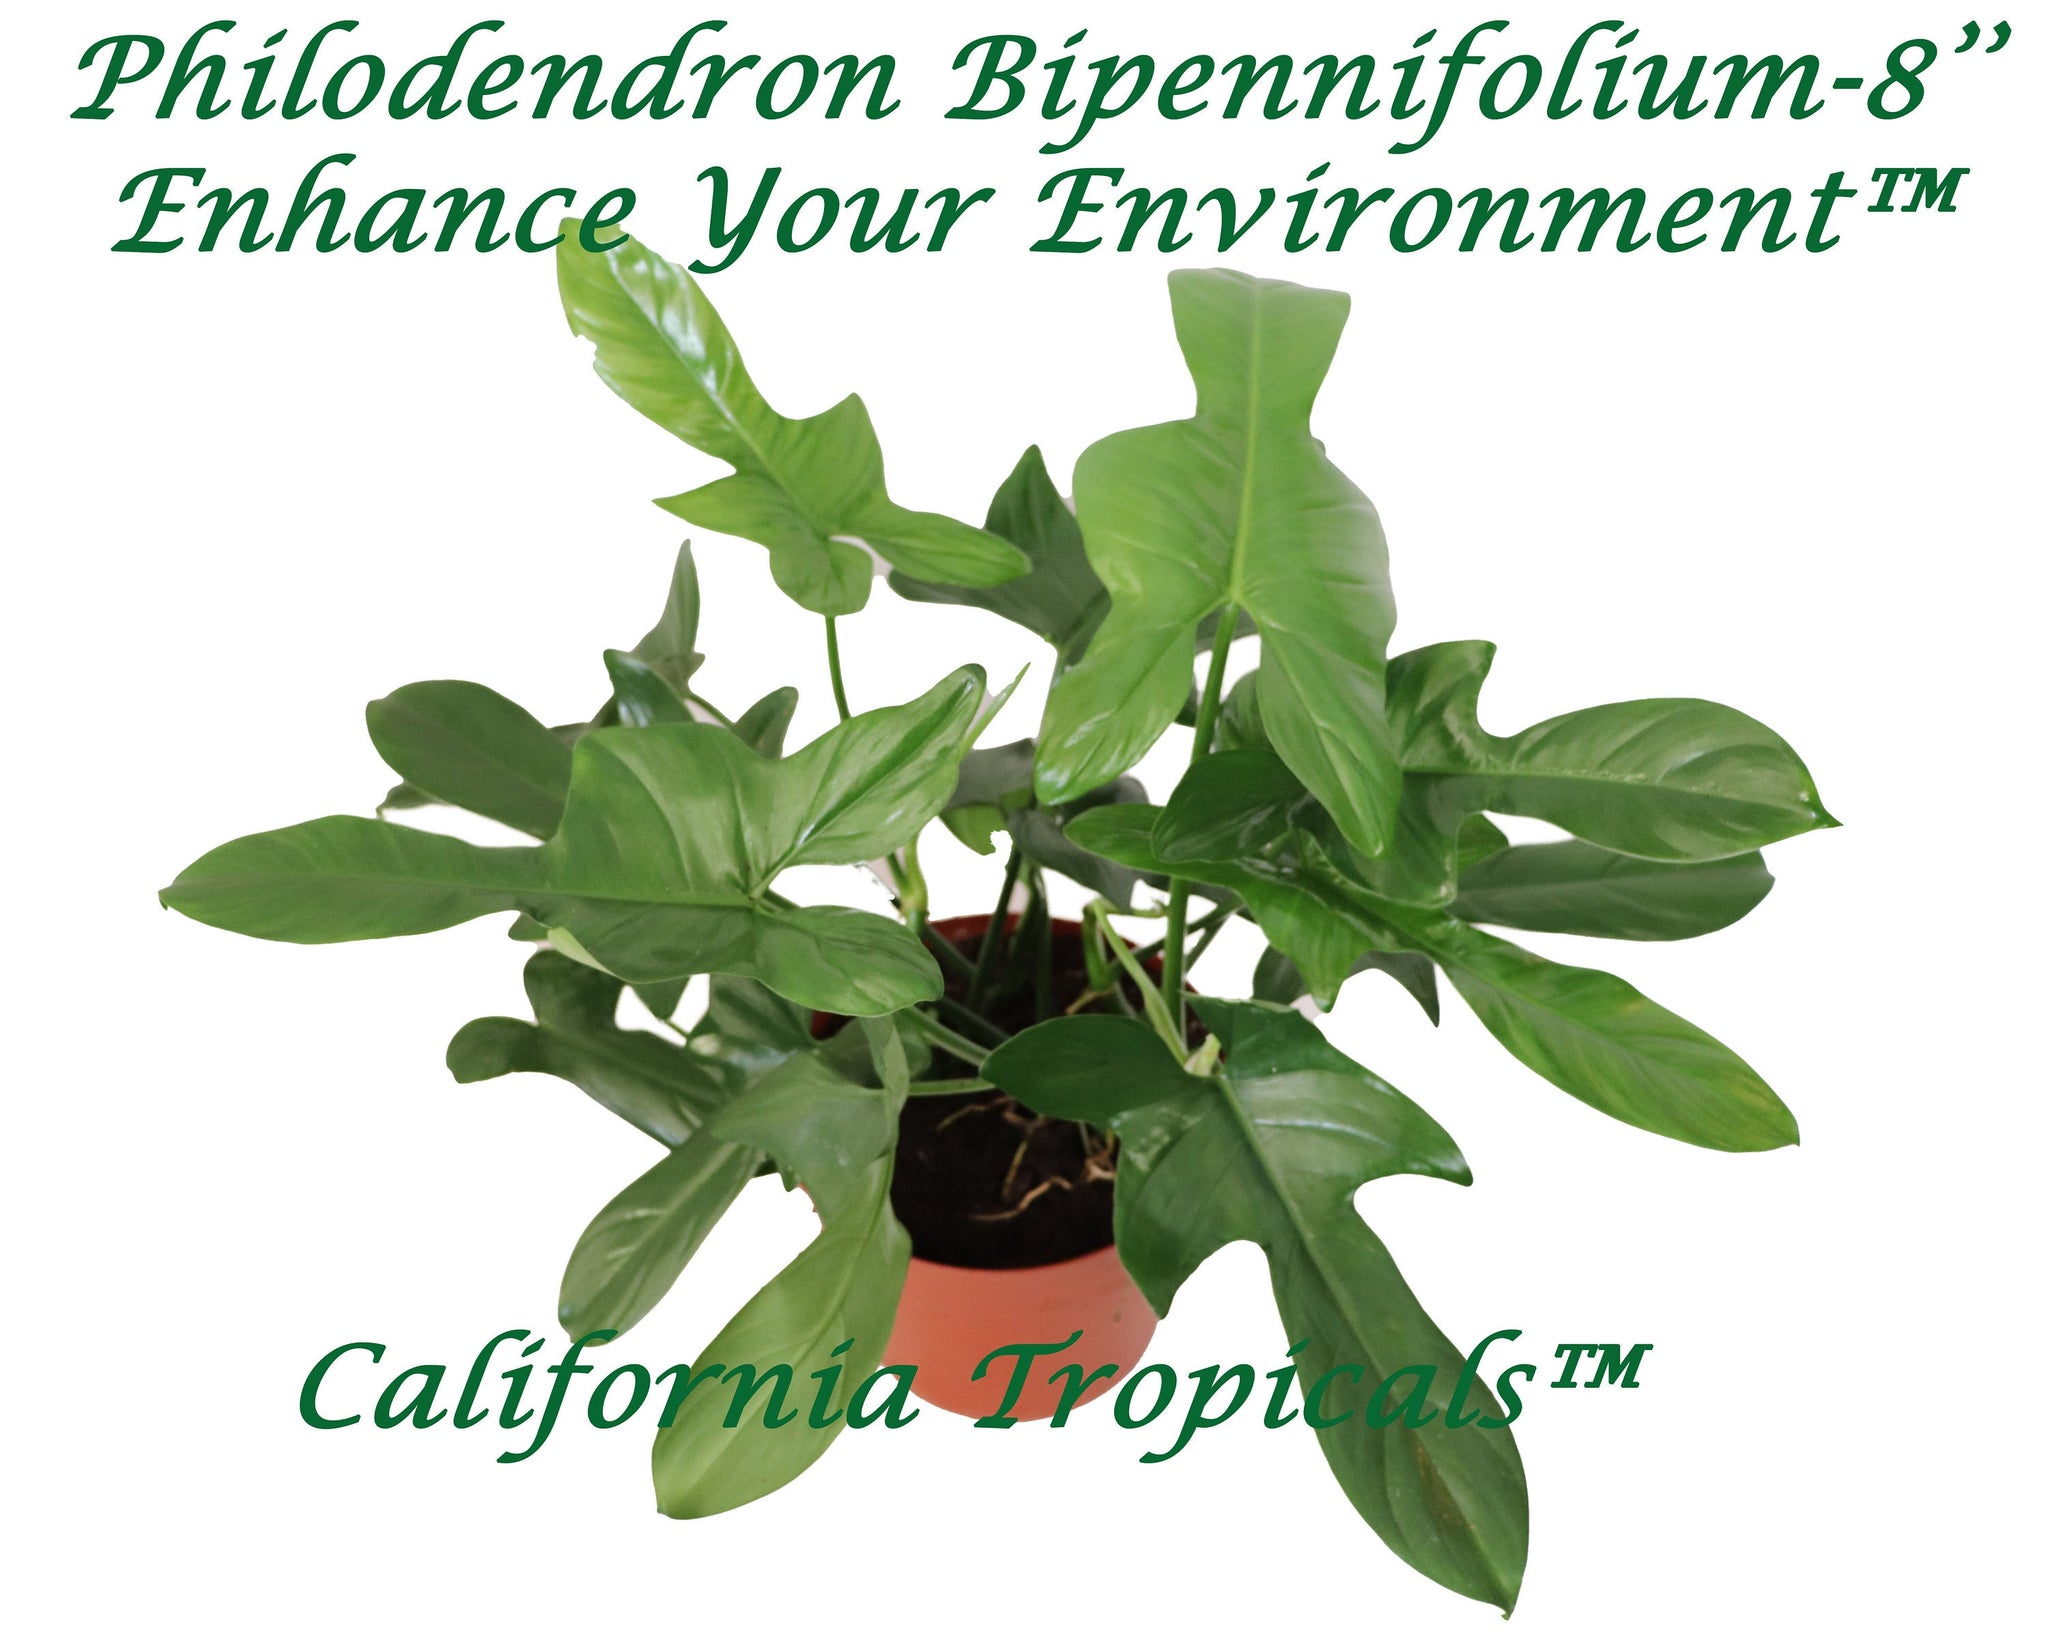 Philodendron Bipennifolium - 8" from California Tropicals